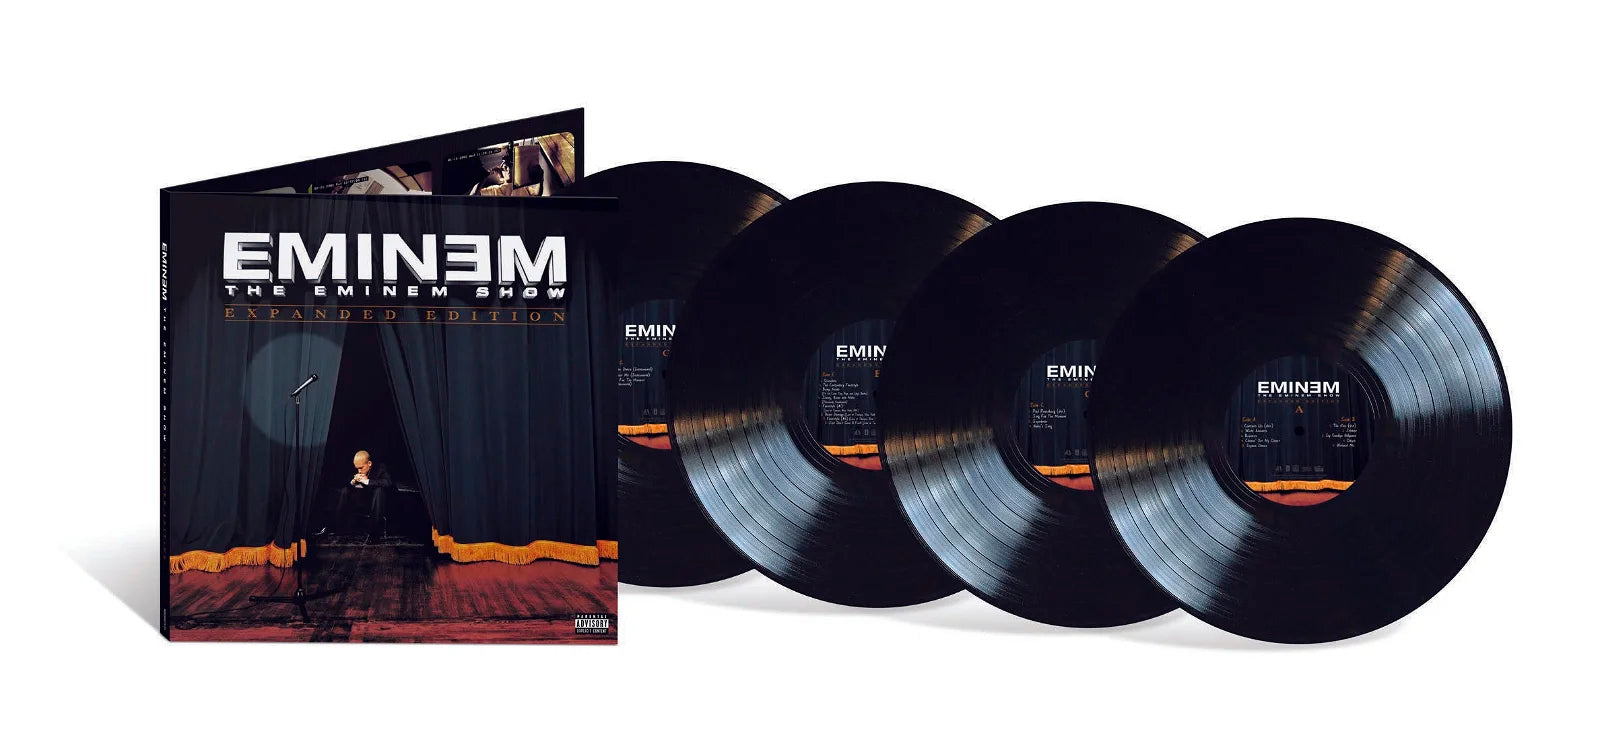 Eminem The Eminem Show Expanded Edition Vinyl LP